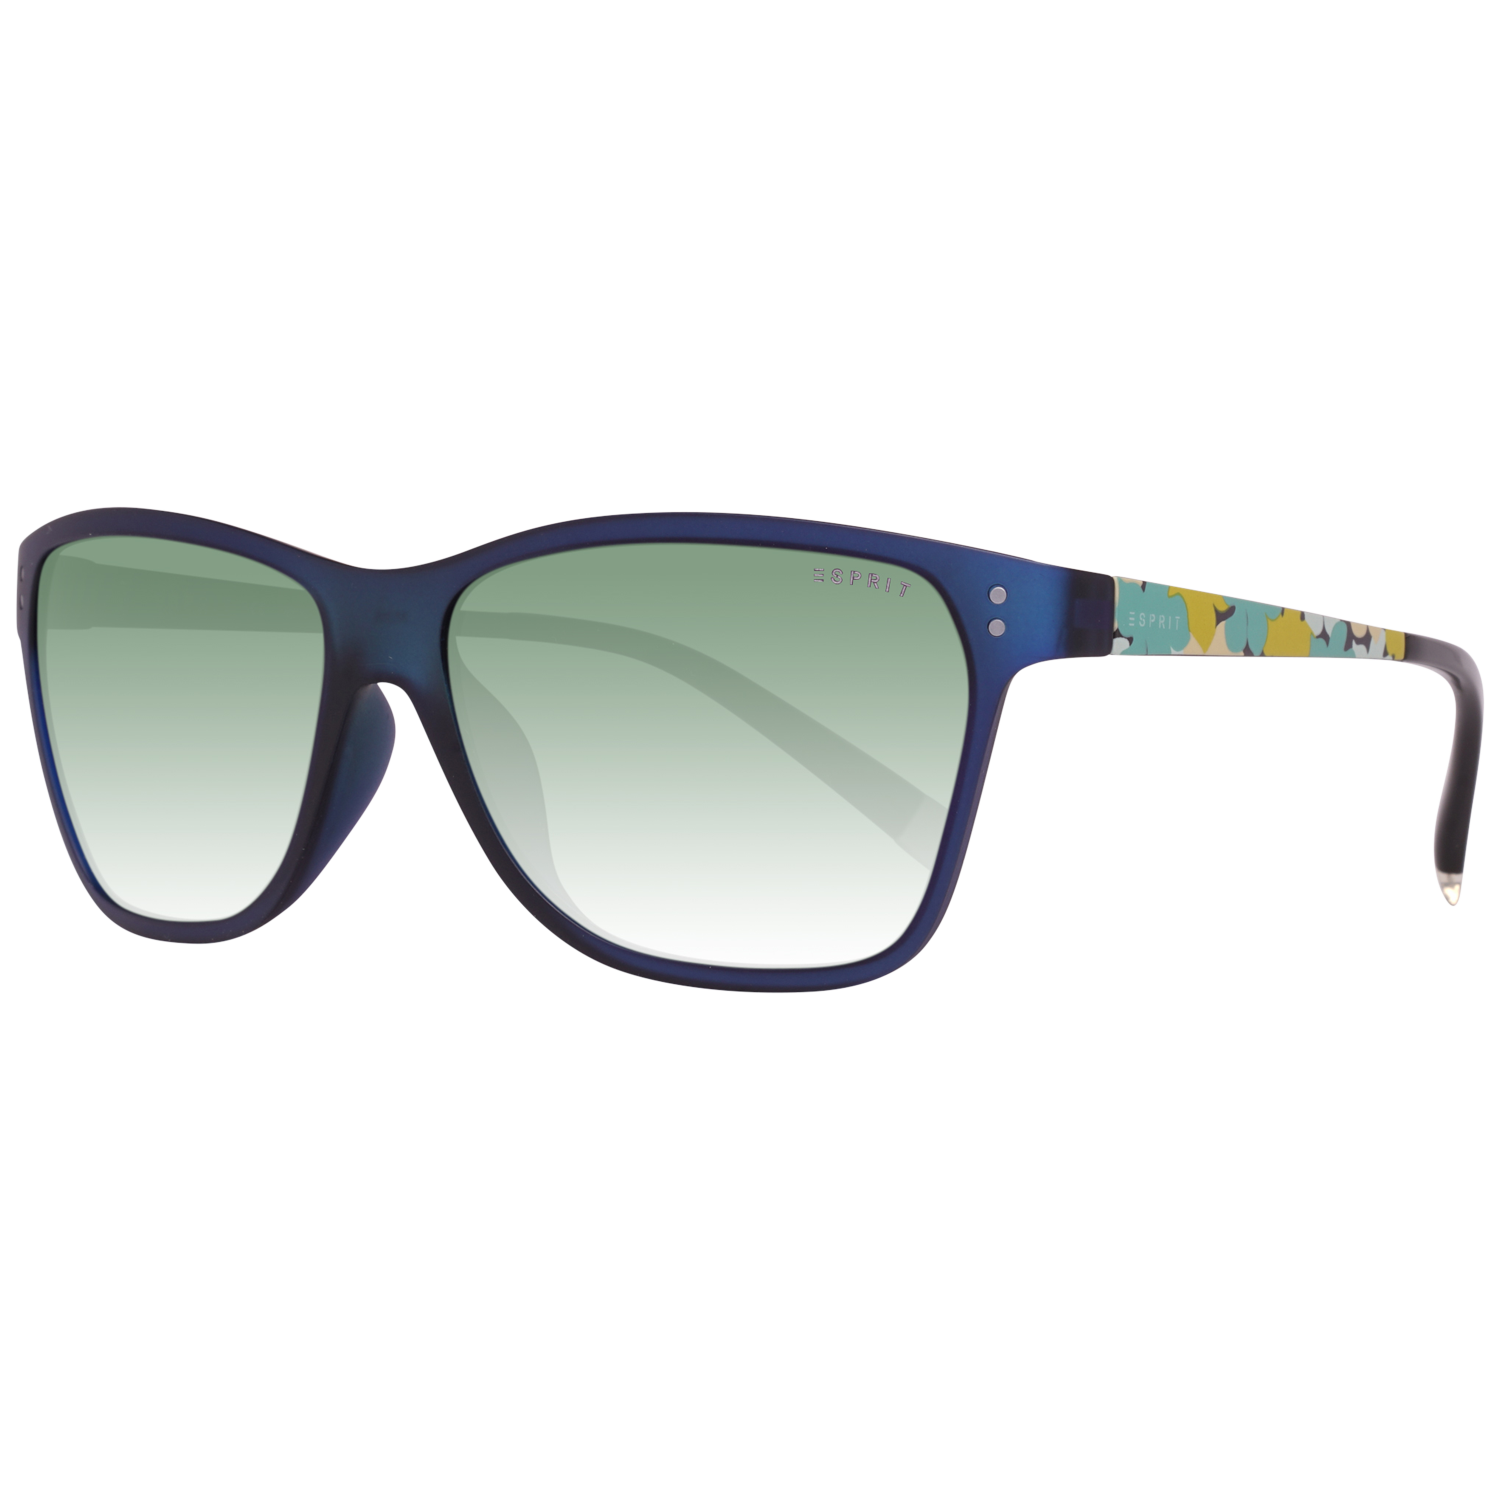 Esprit Sunglasses ET17887 547 57 Blue